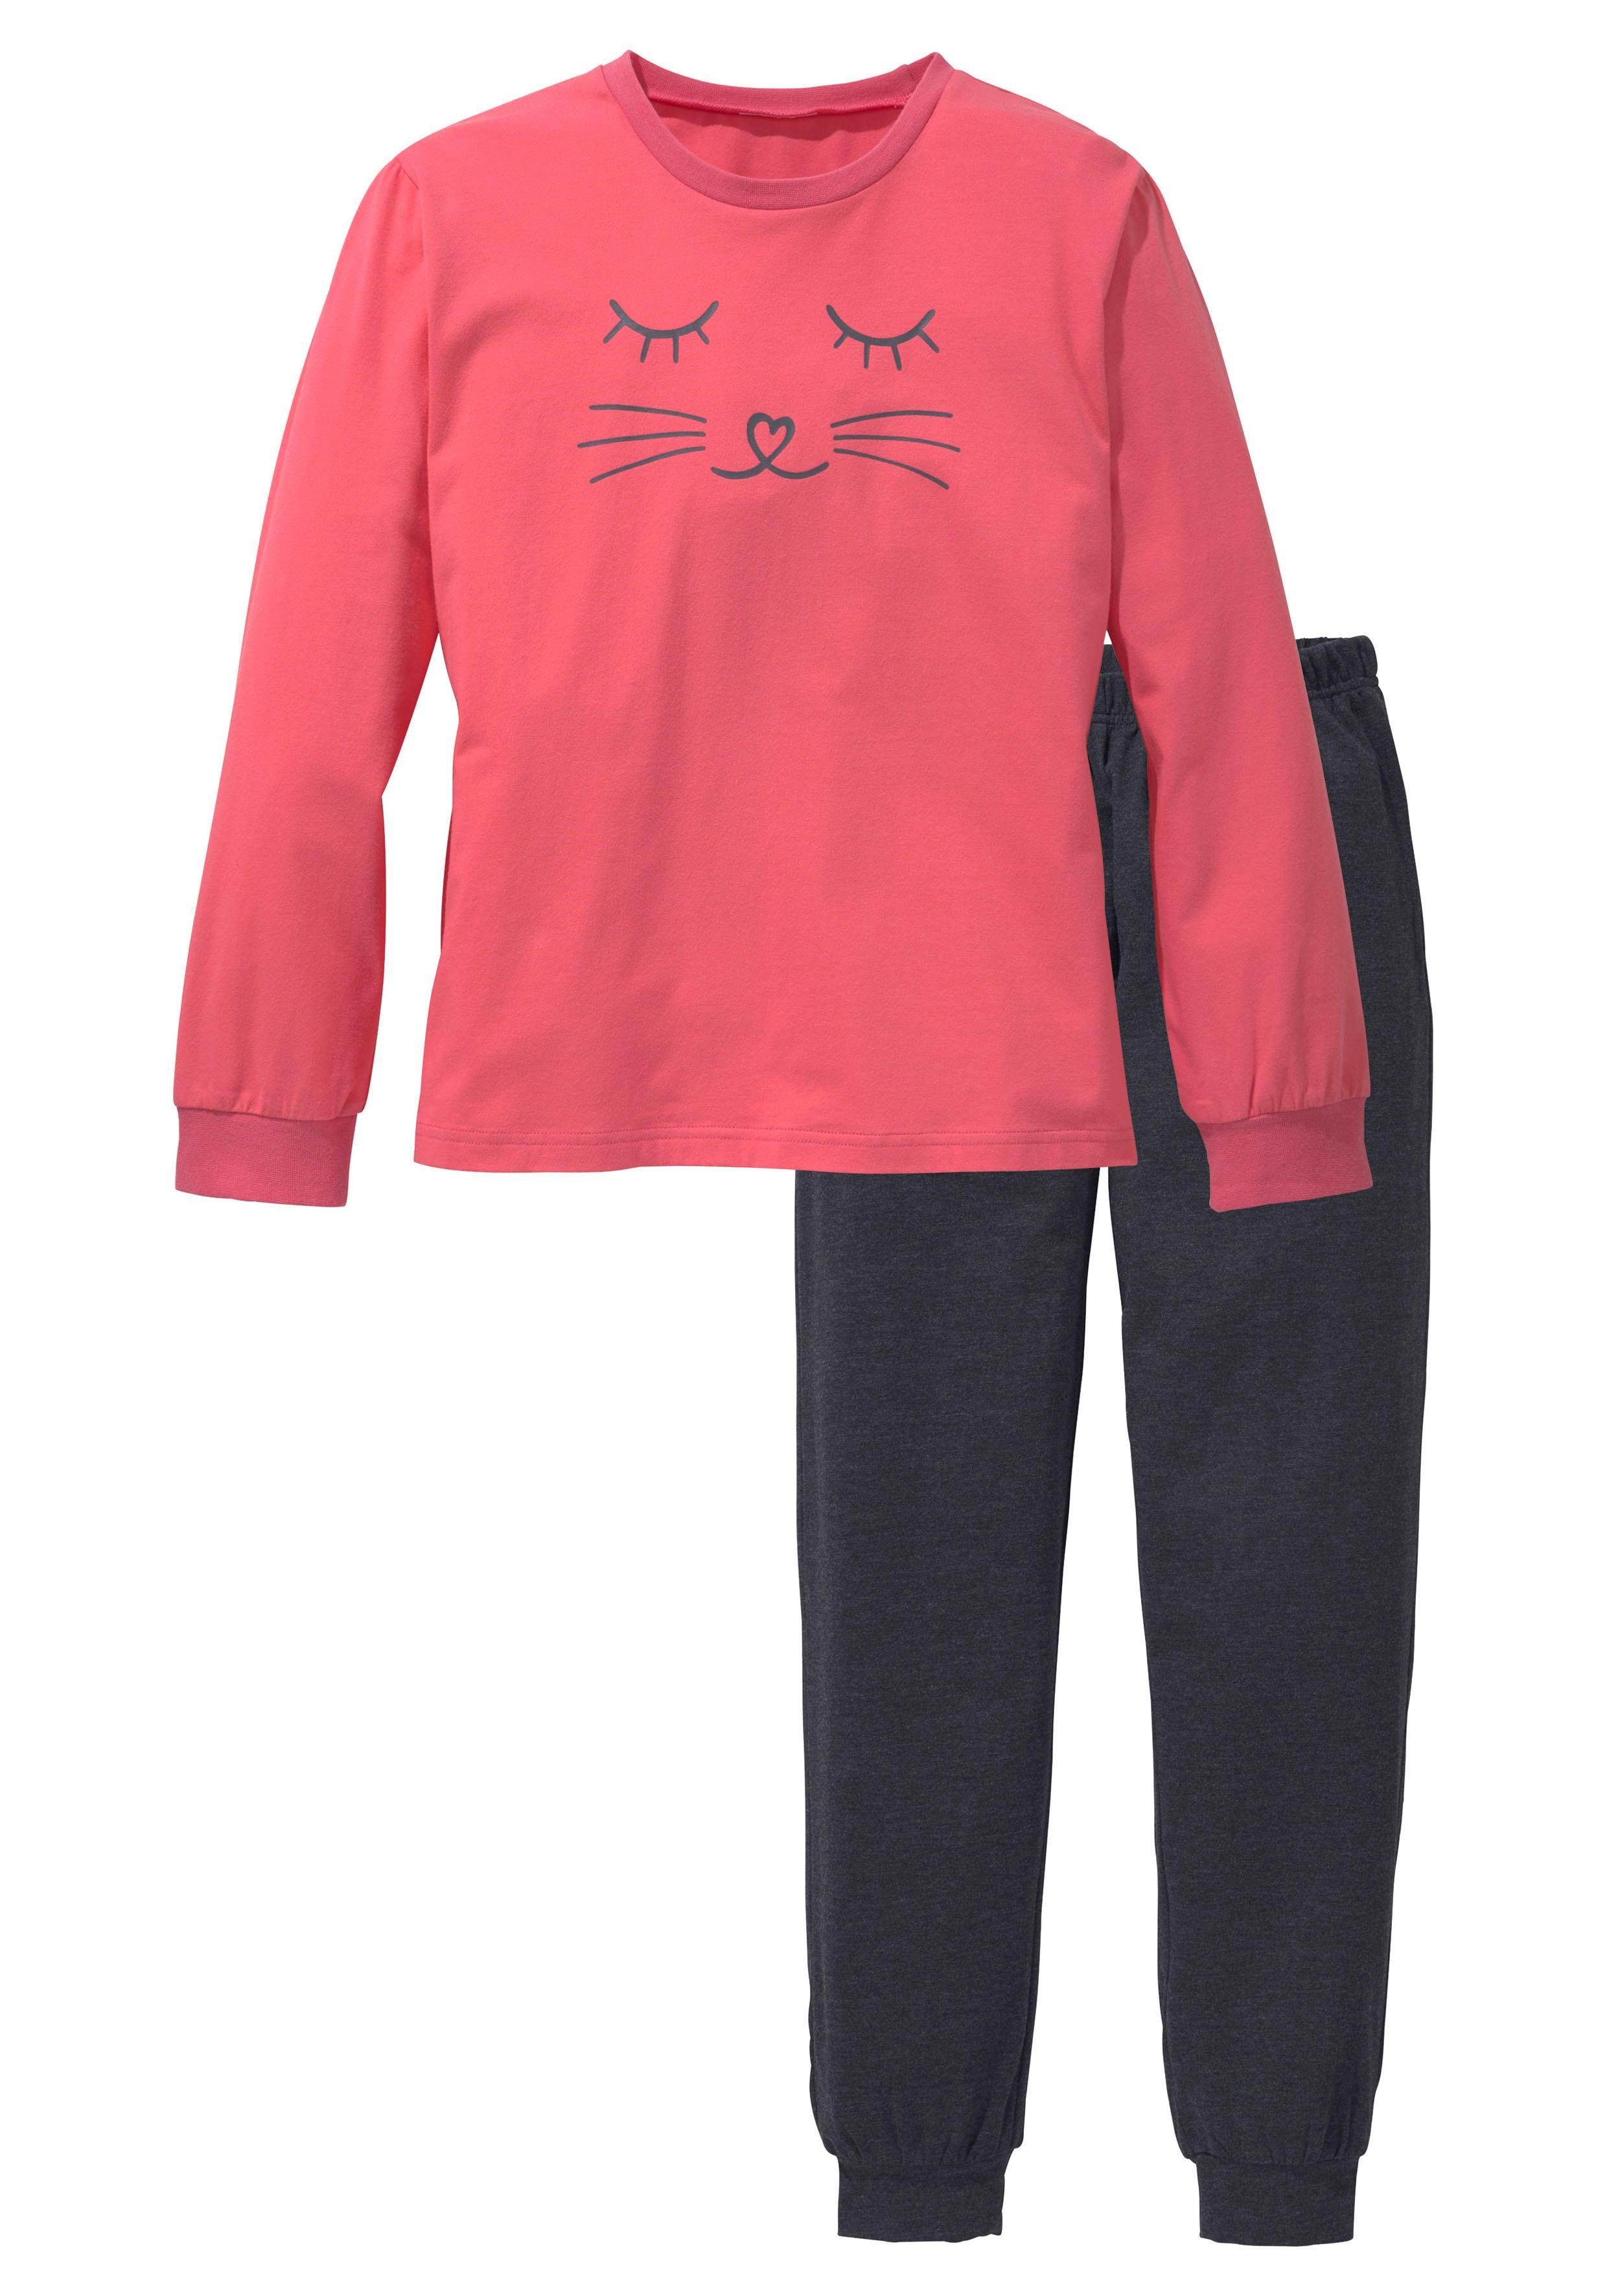 Print tlg., Stück) mit Form 1 Vivance (2 langer Cat in Pyjama